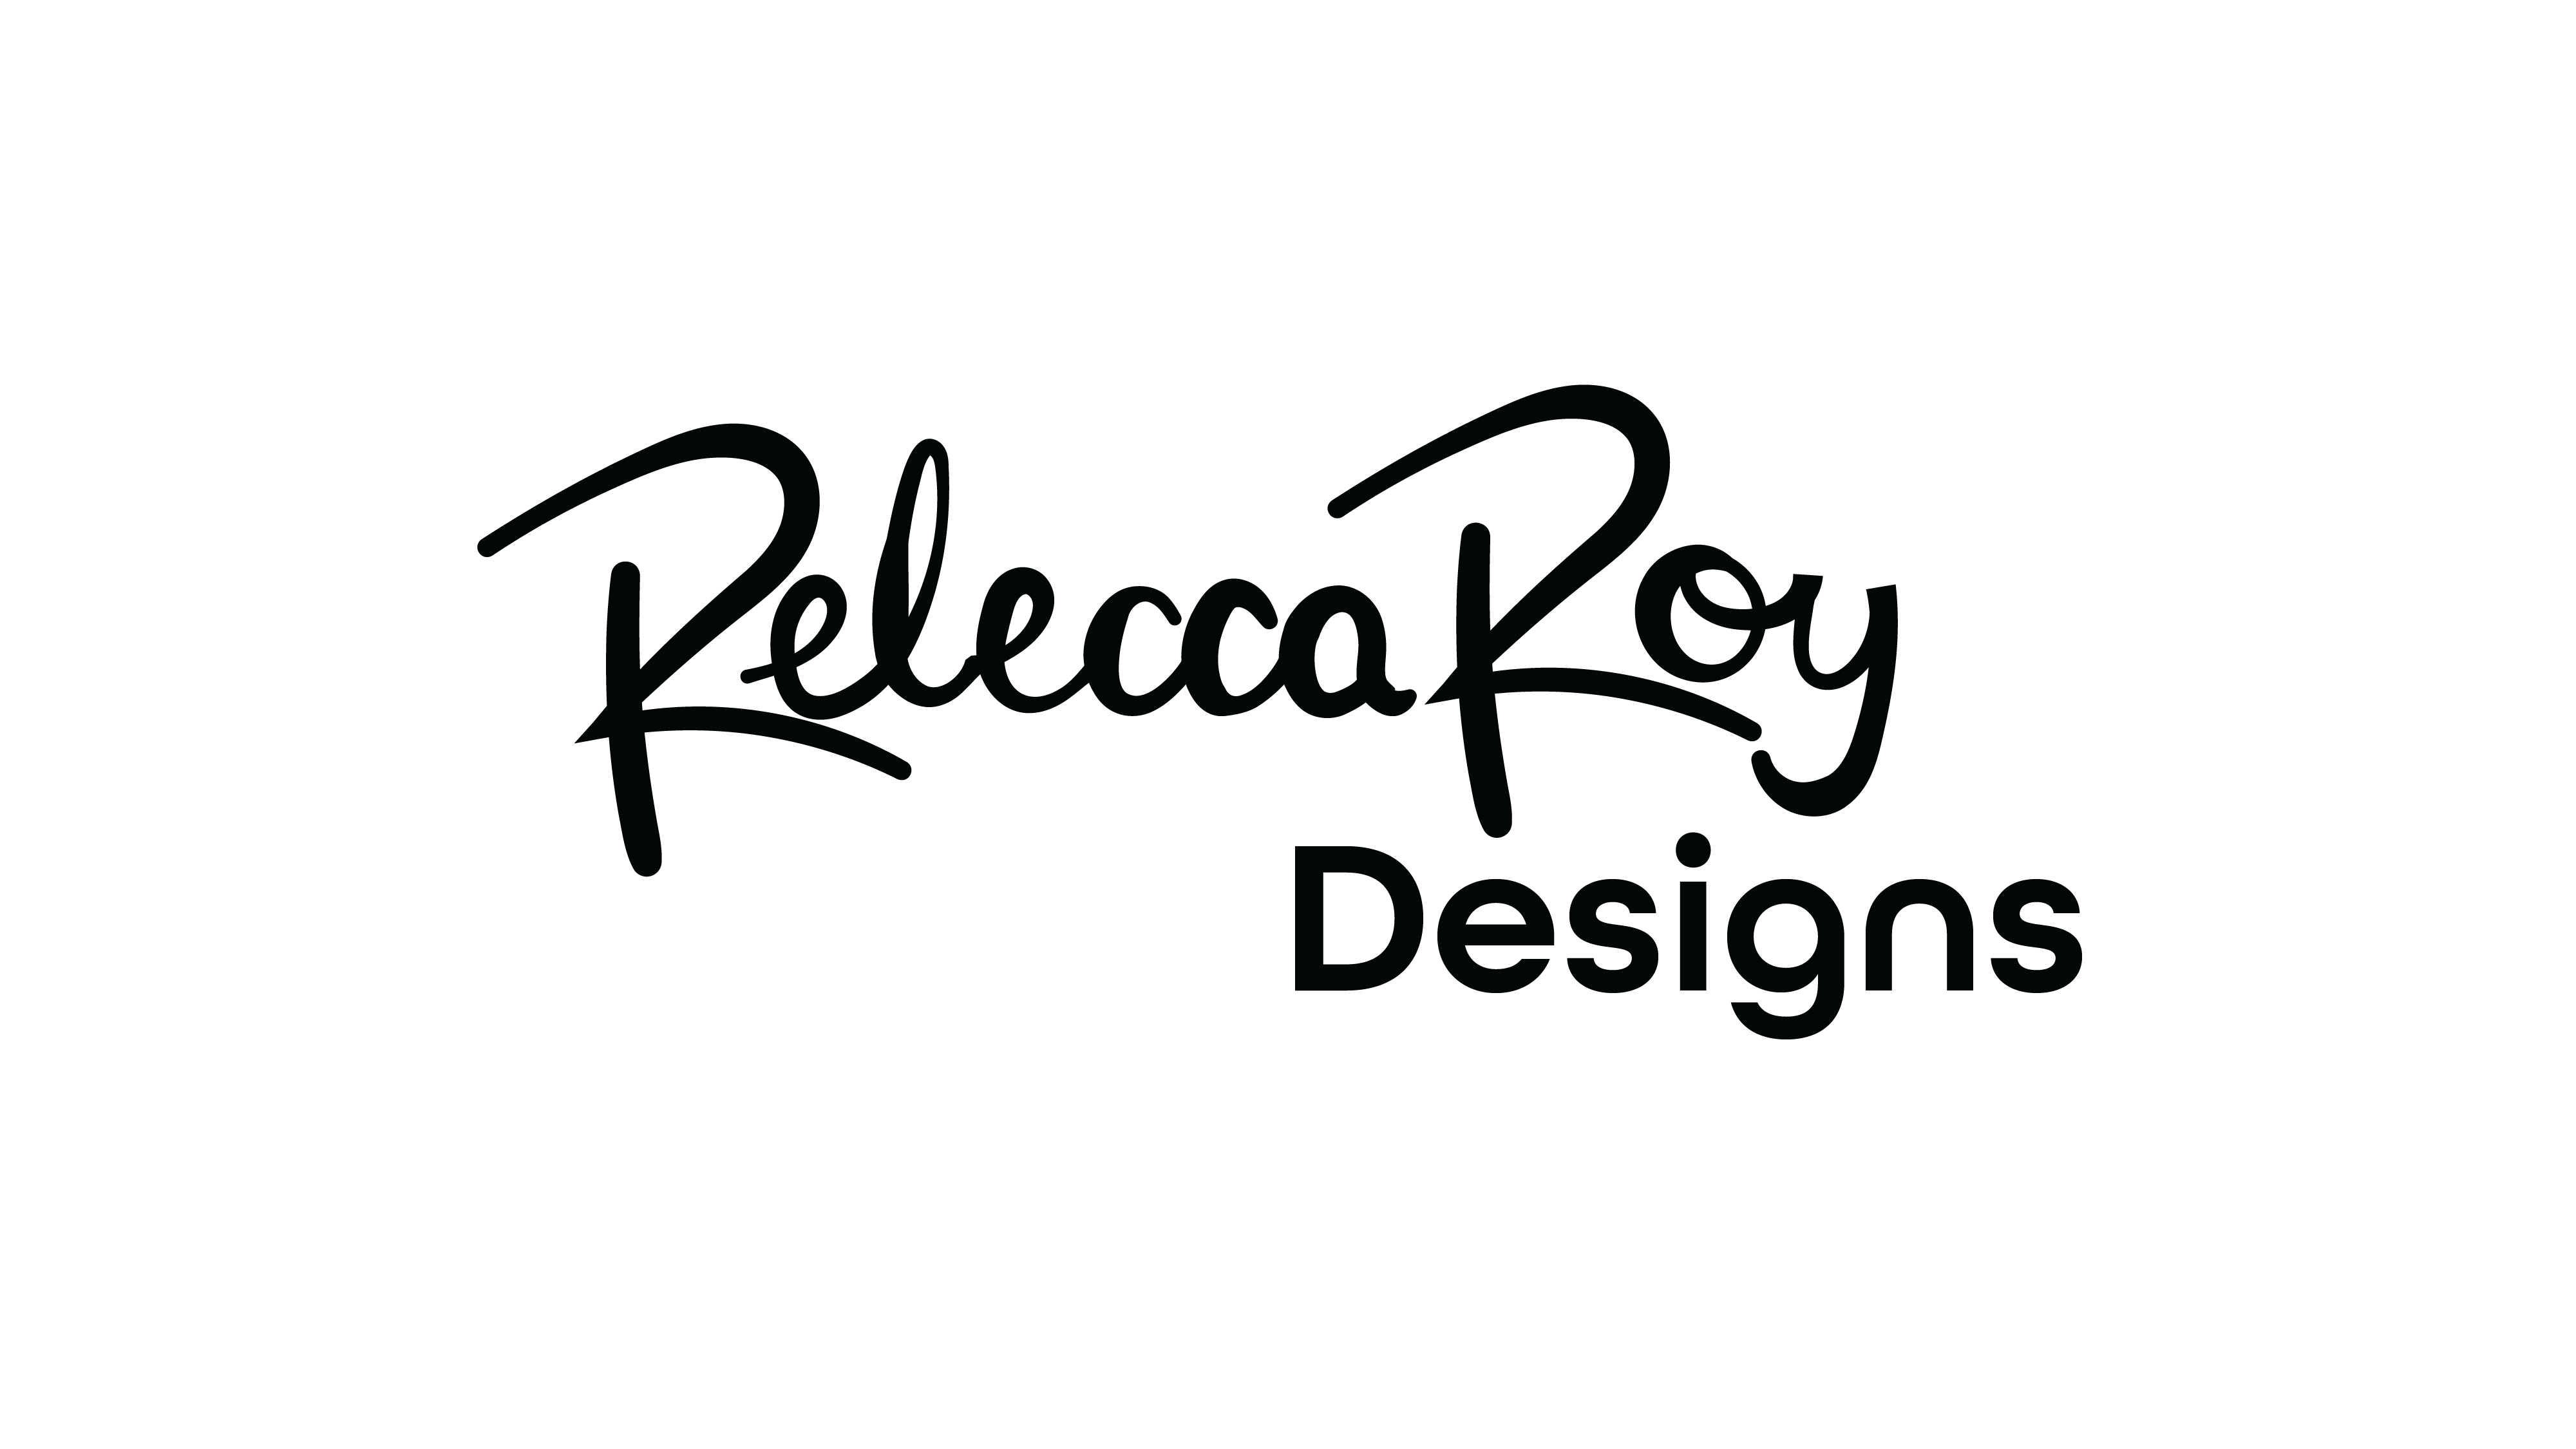 Rebecca Roy Designs